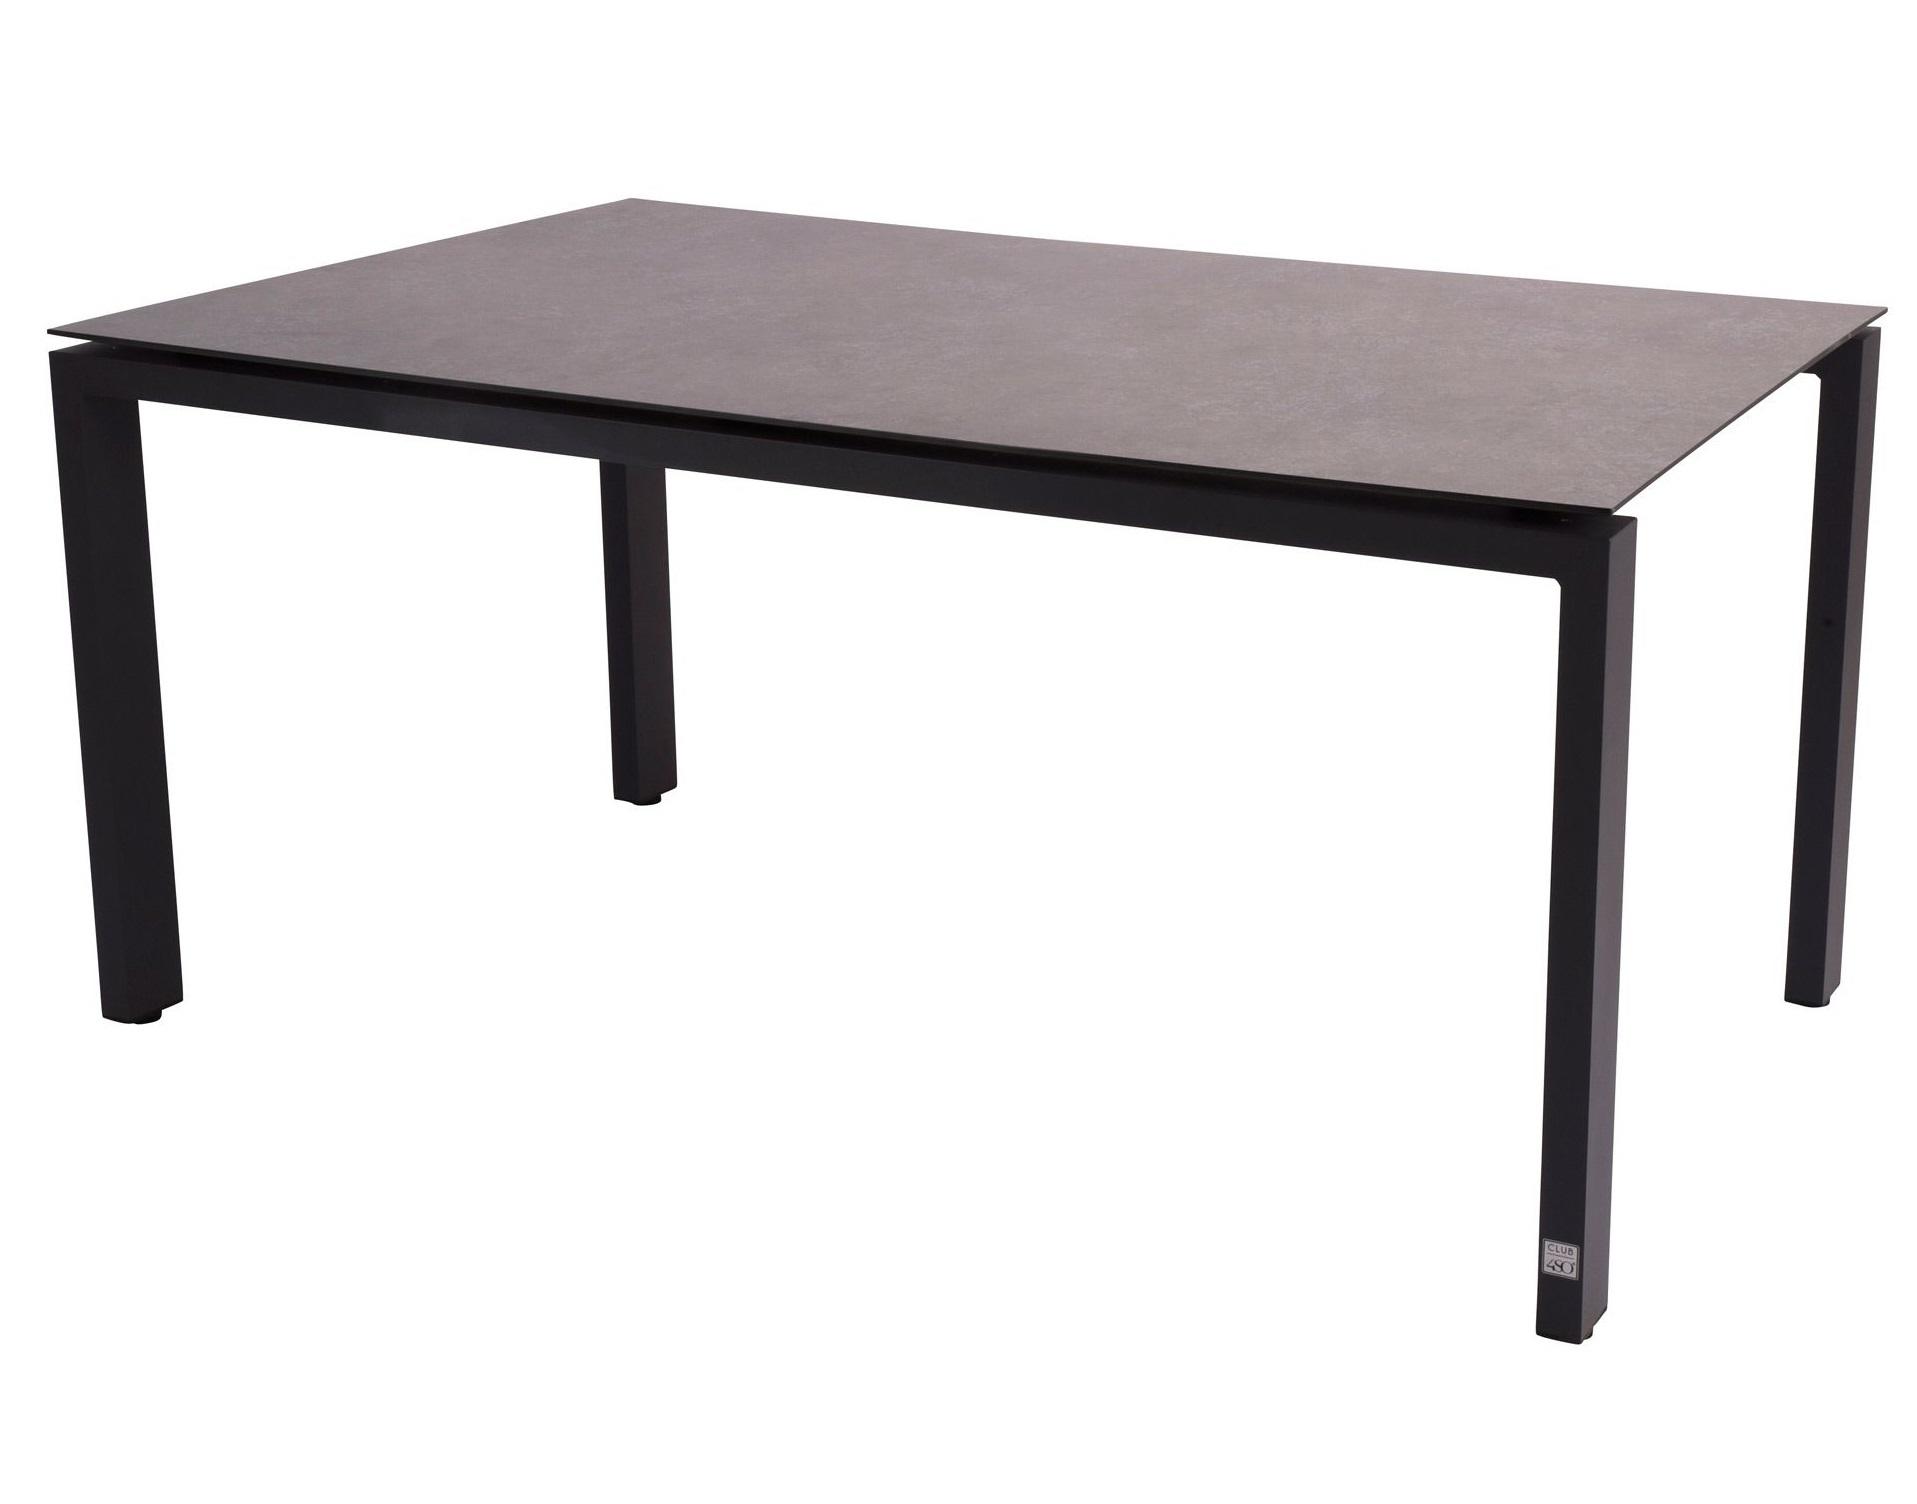 160 cm slate effect hpl and grey aluminium garden patio dining table